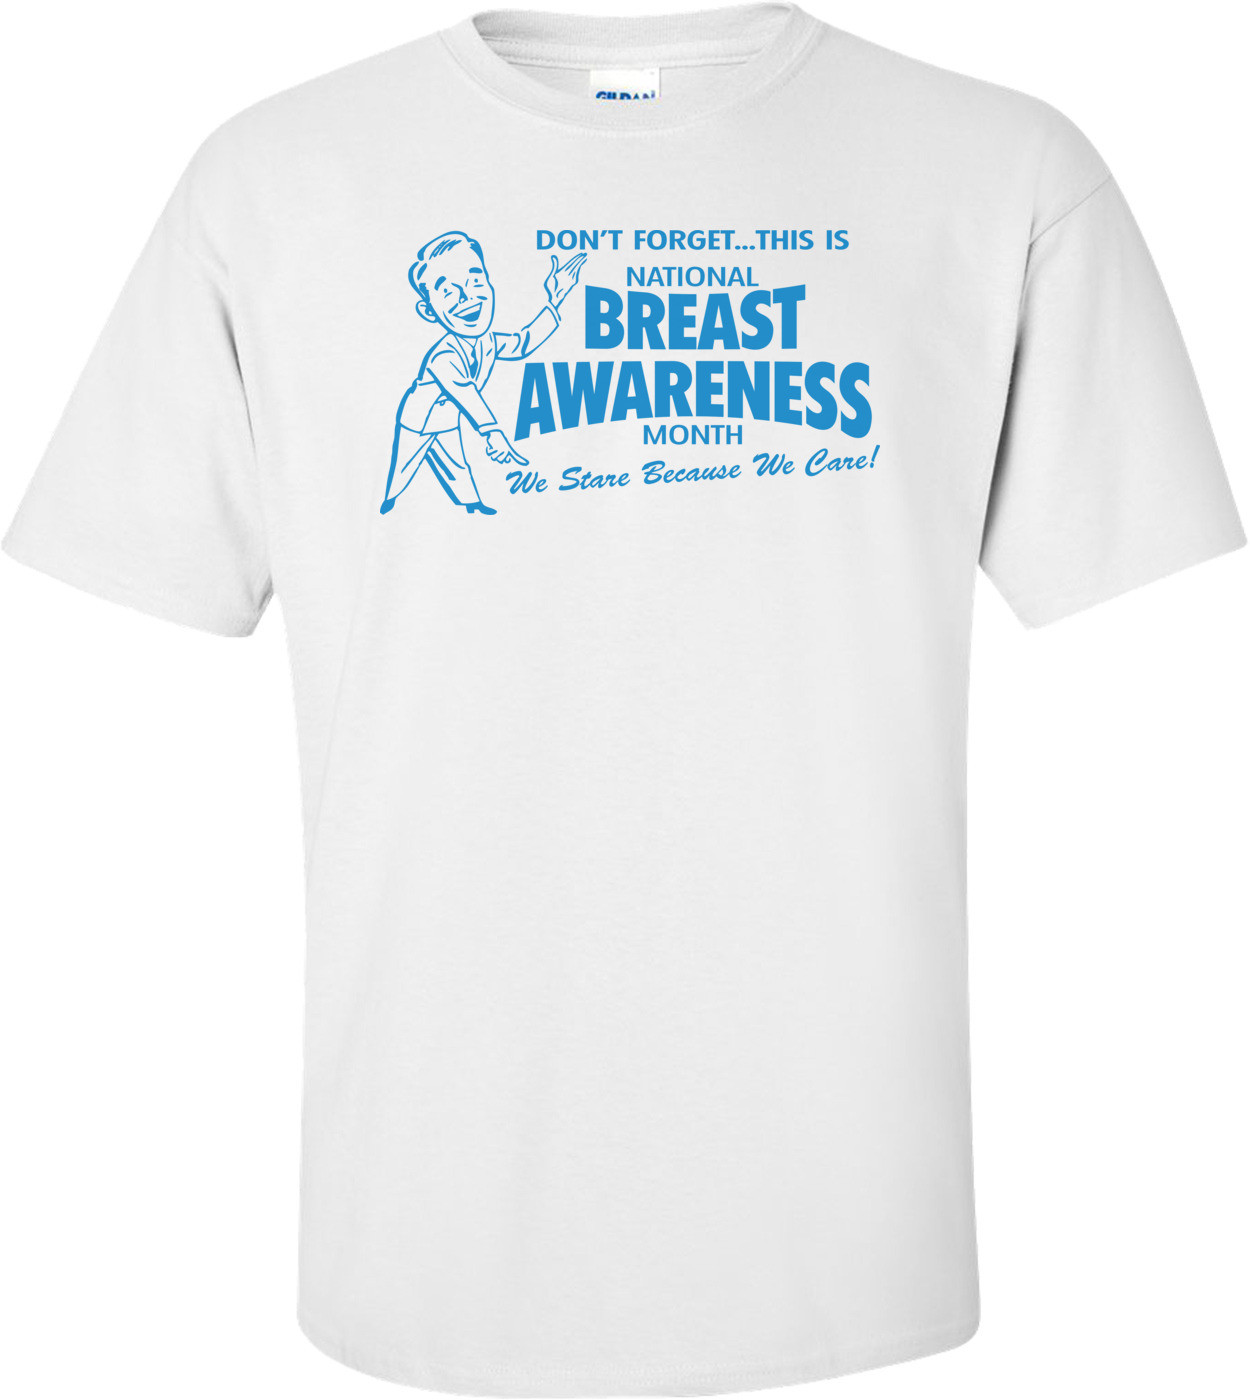 National Breast Awareness Month T-shirt 